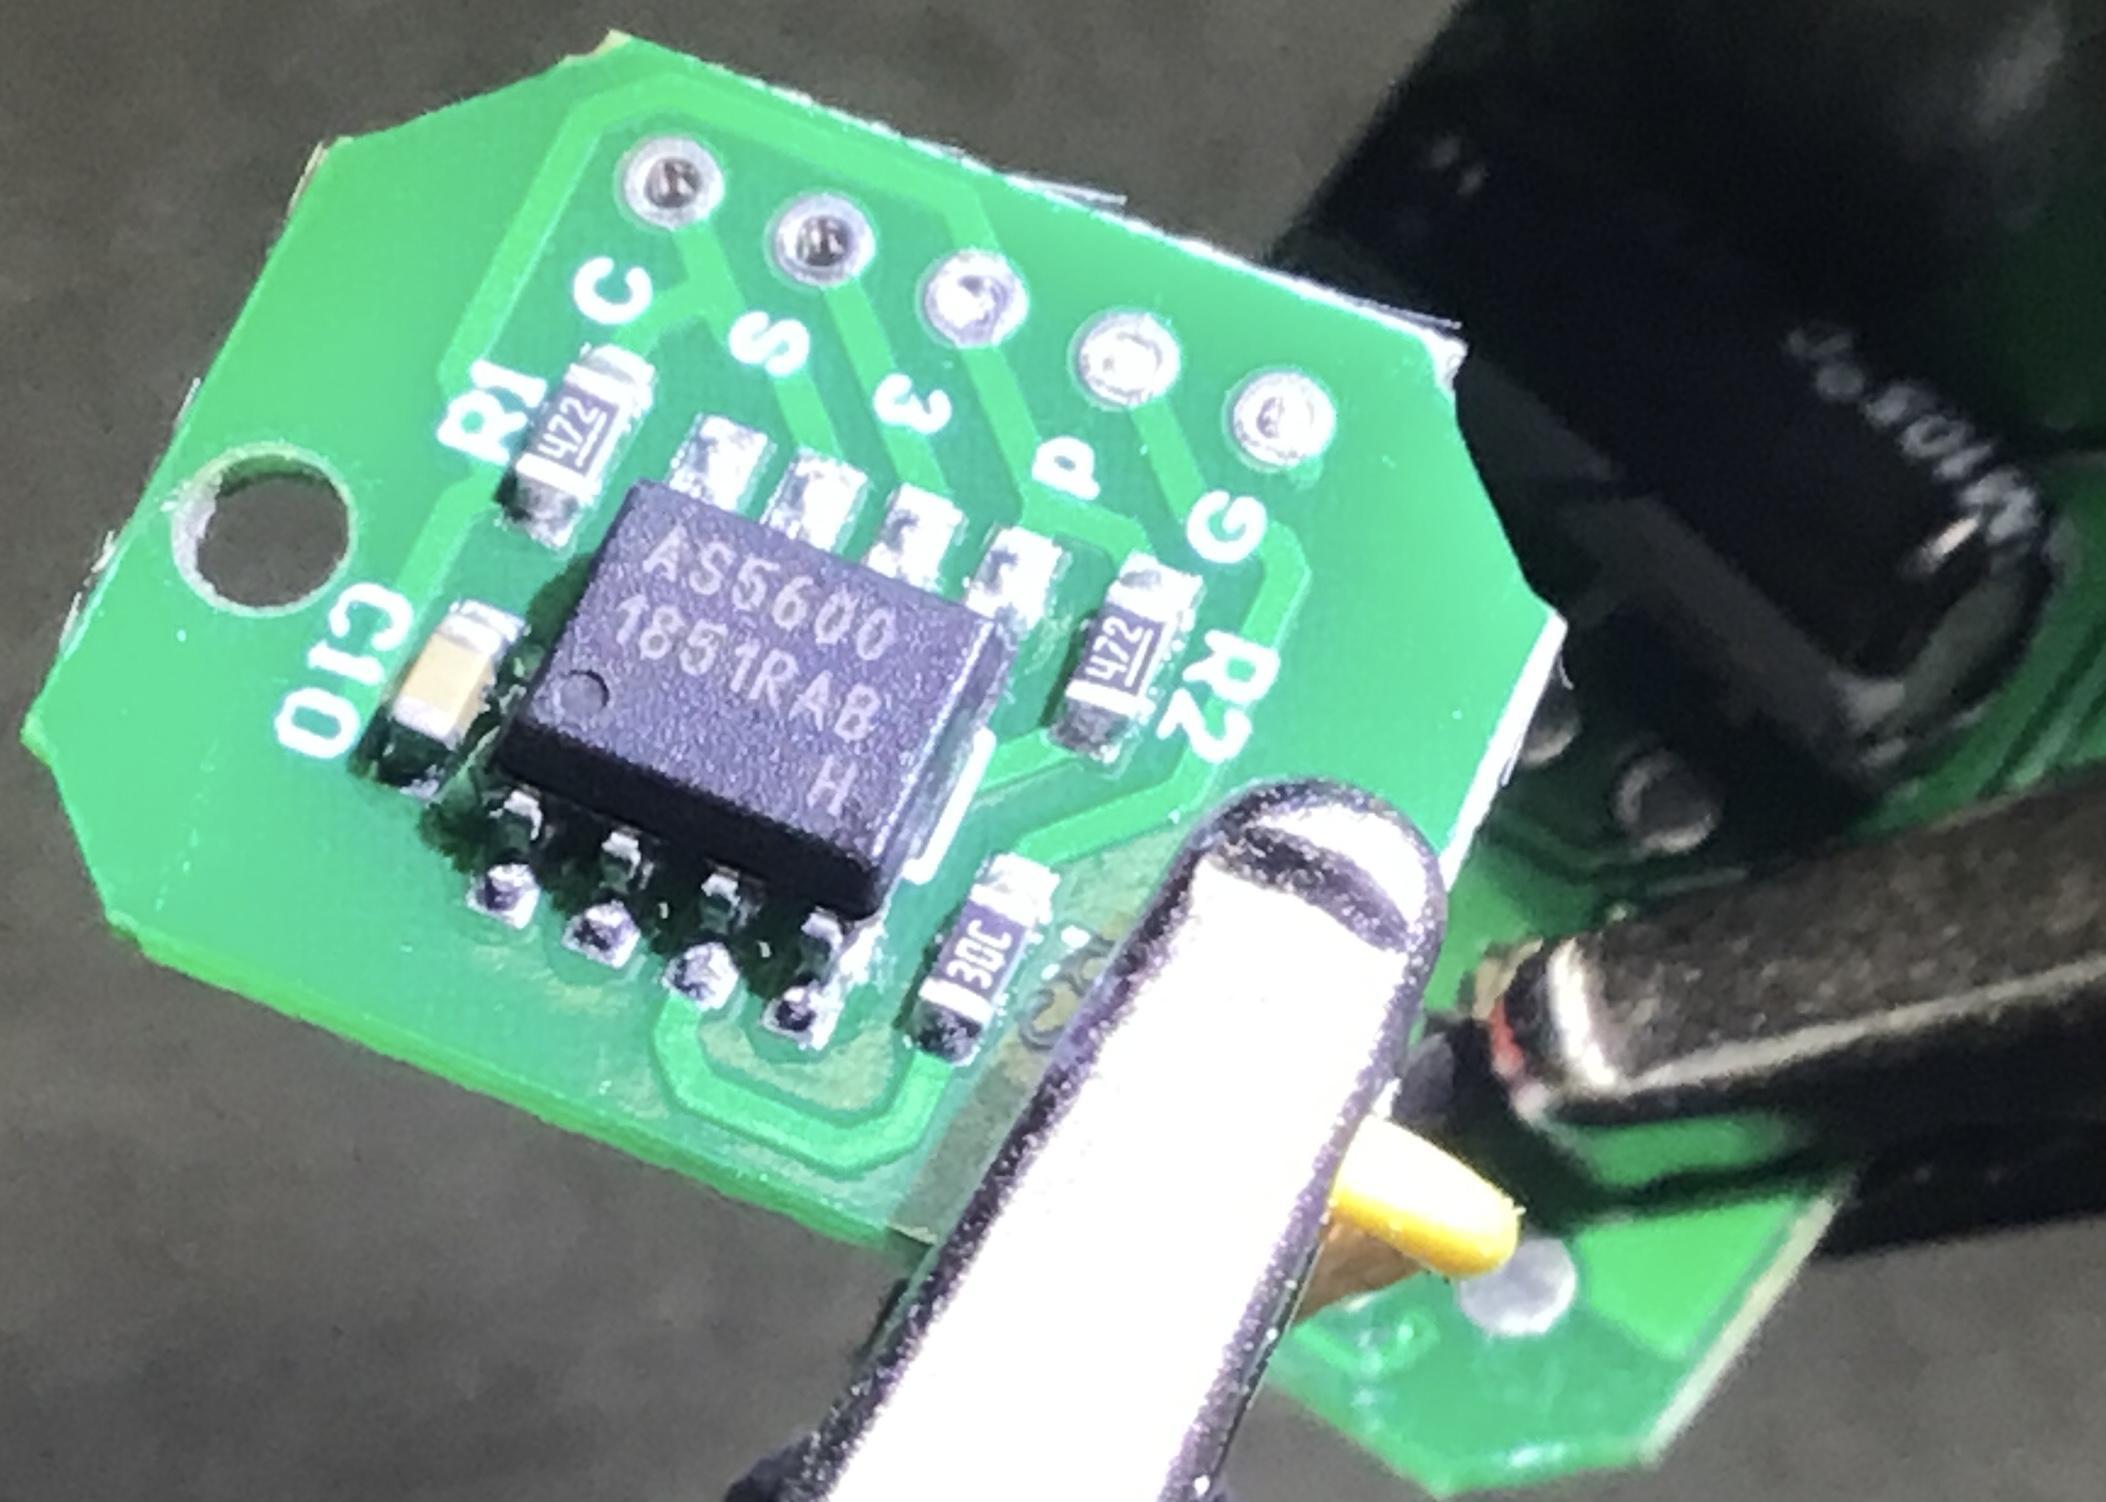 Illuminated close-up of Feedback 360 angle sensor circuit board showing IC labeled 'AS5600'